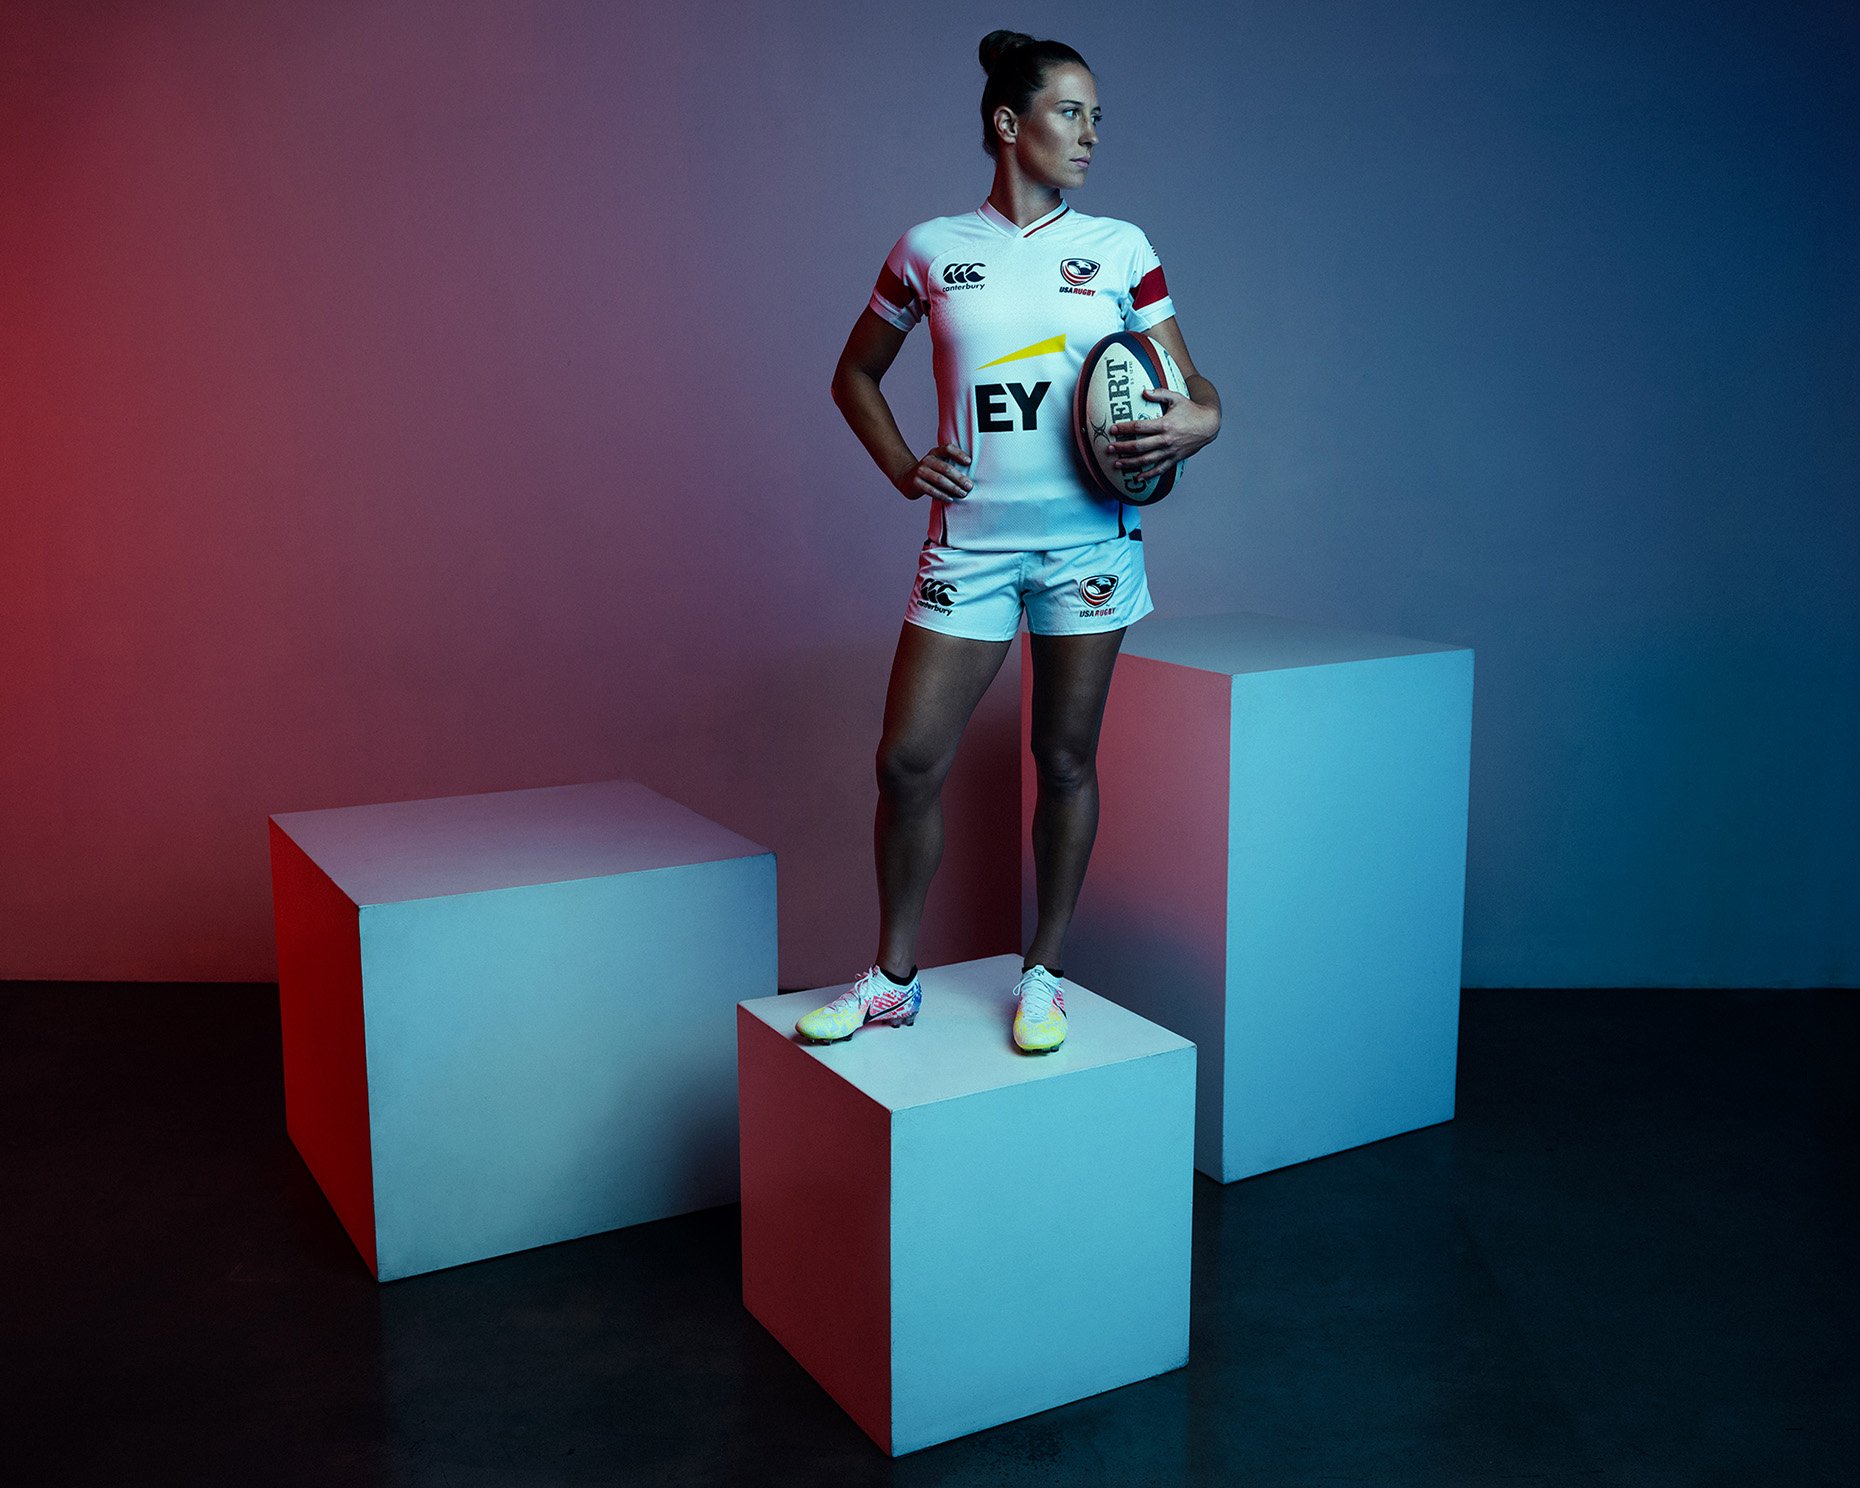 AaronAnderson_Sport_Lauren-Doyle_USA_Rugby_Olympian_25.jpg